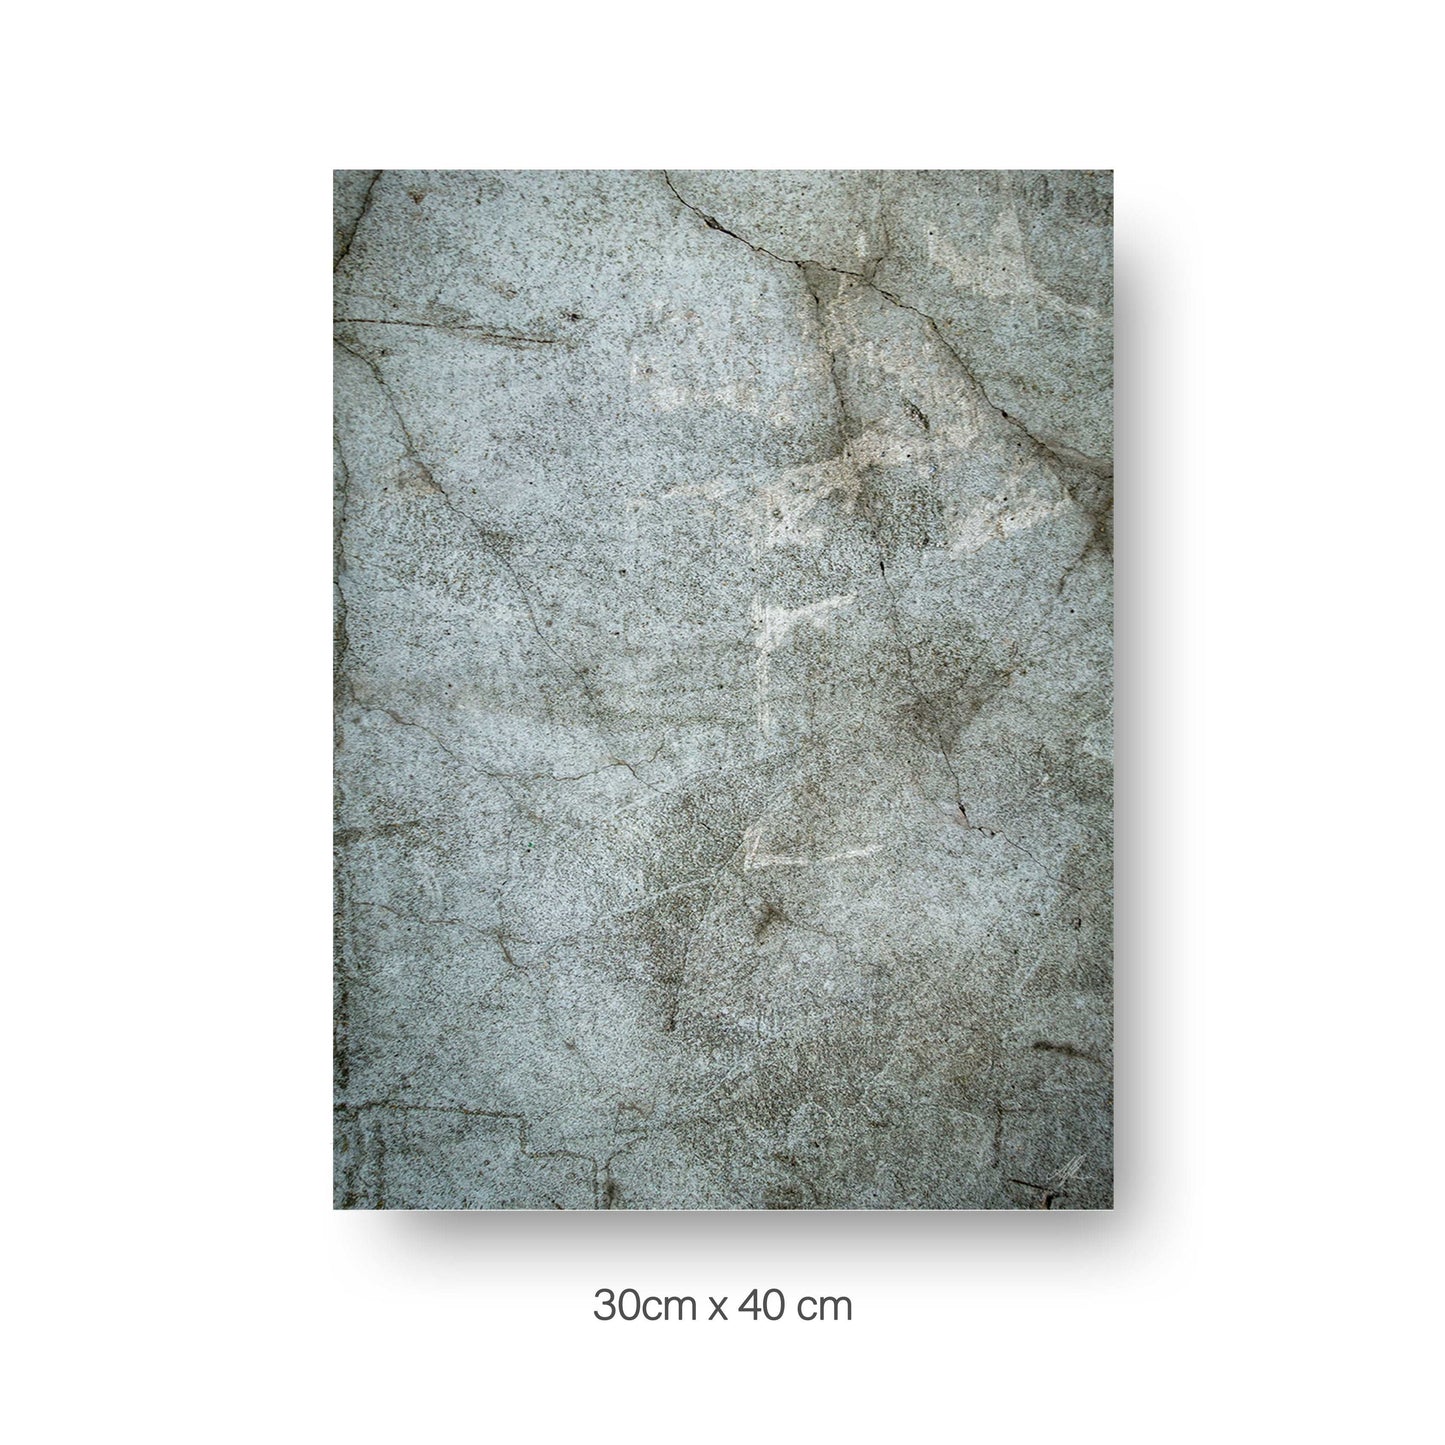 NOKUKO - photo- Alan Pedersen - ALANTHEROCK - Concrete Cracks - 30cmx40cm - print